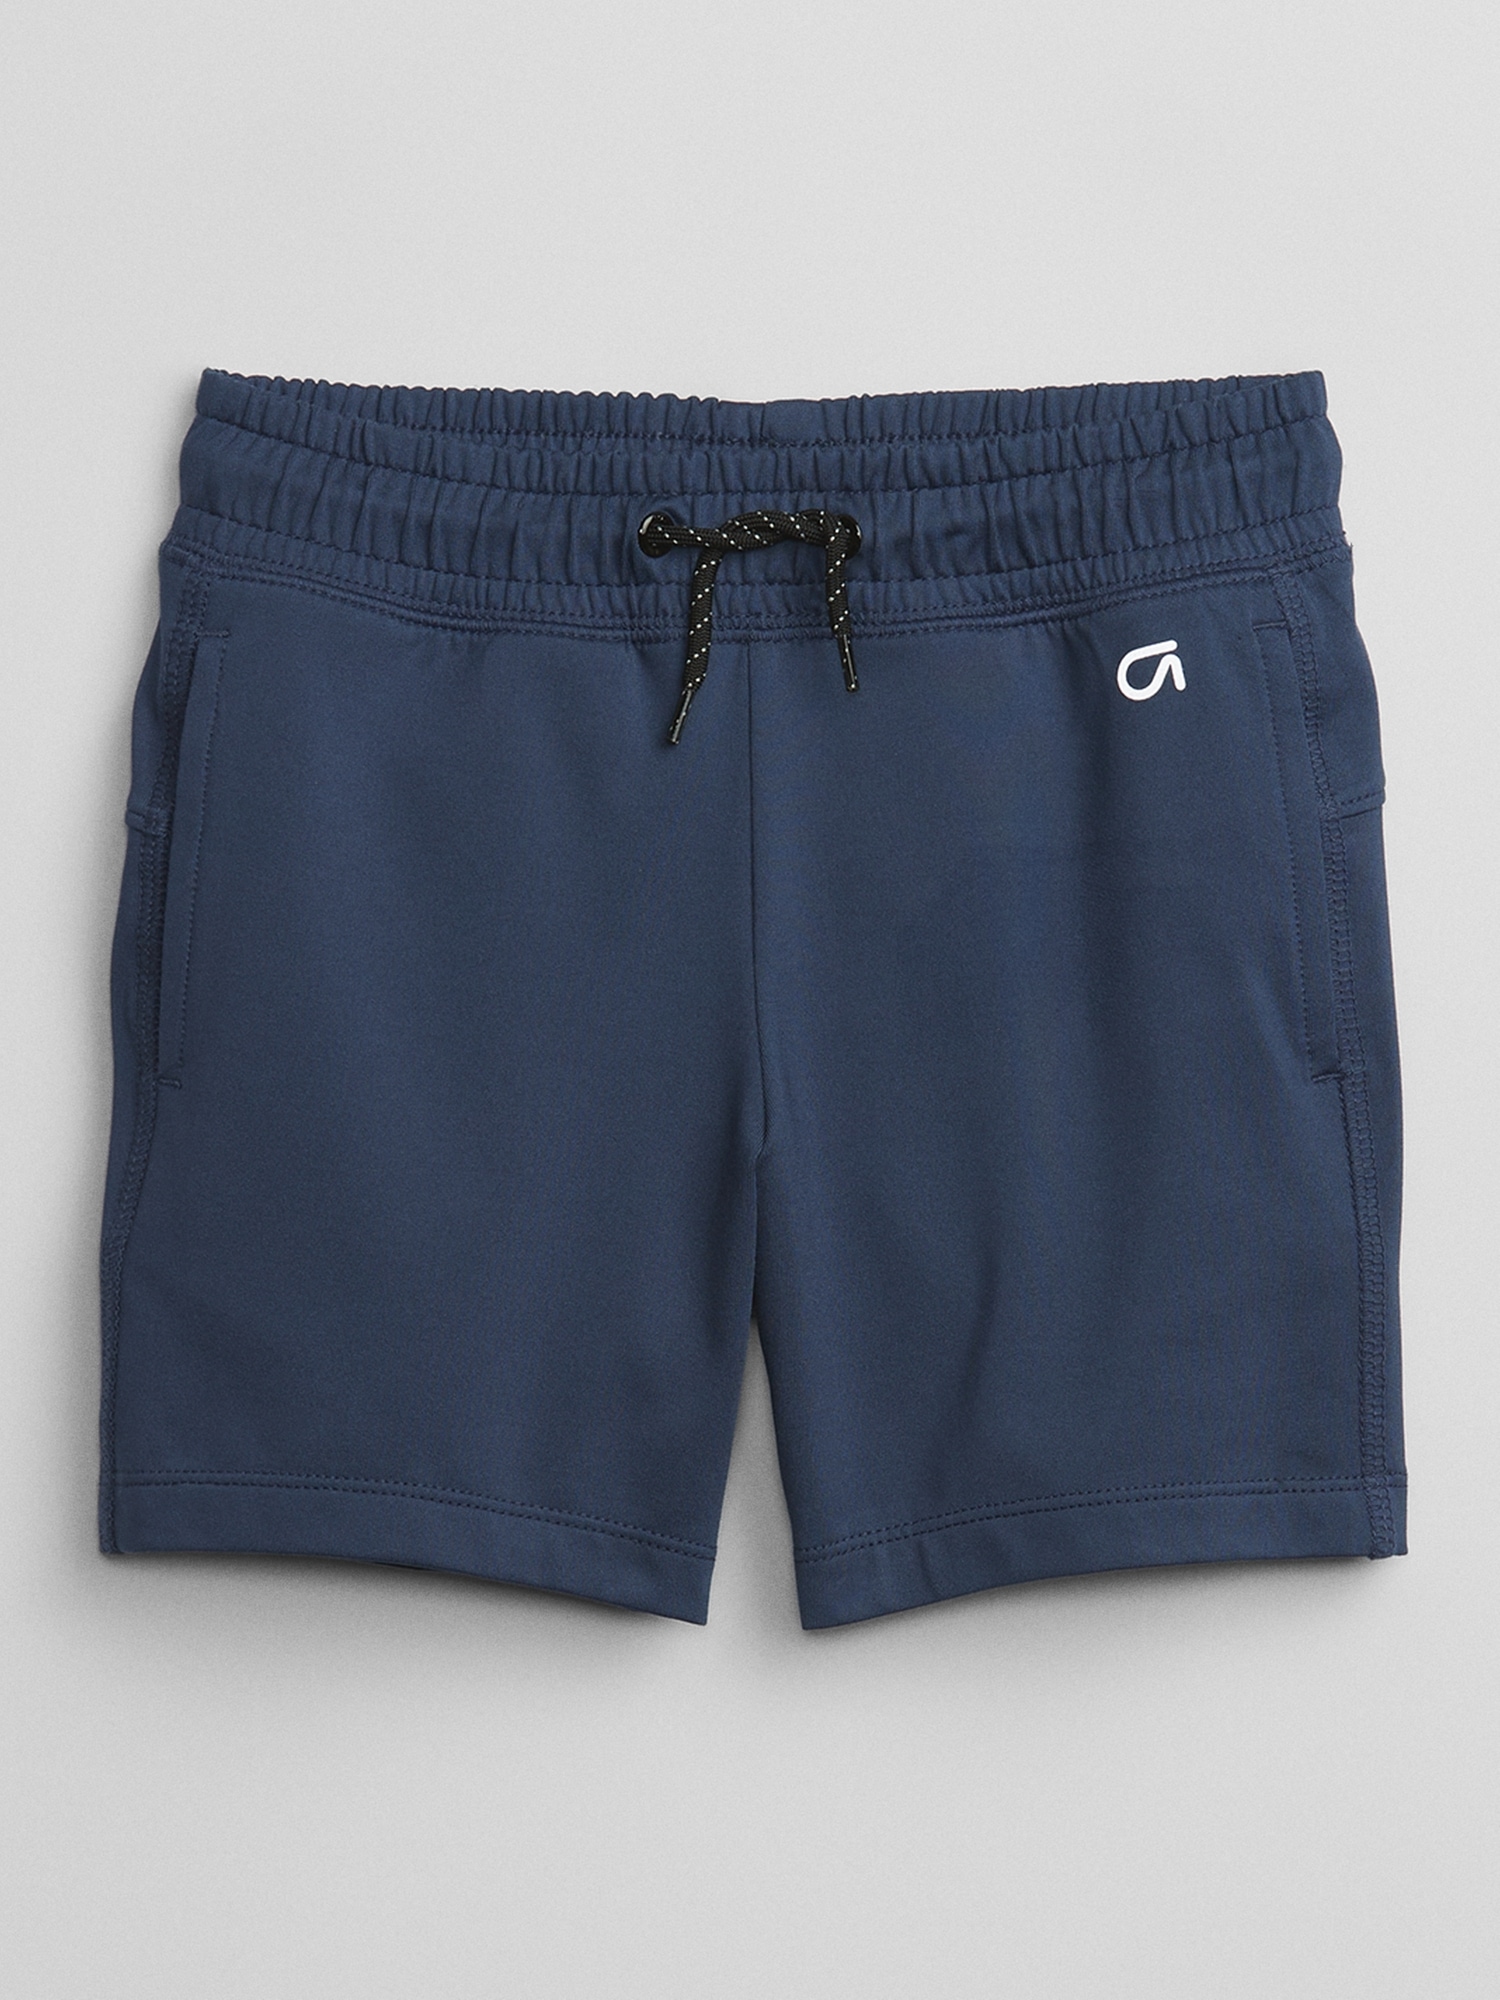 GapFit babyGap Tech Pull-On Shorts